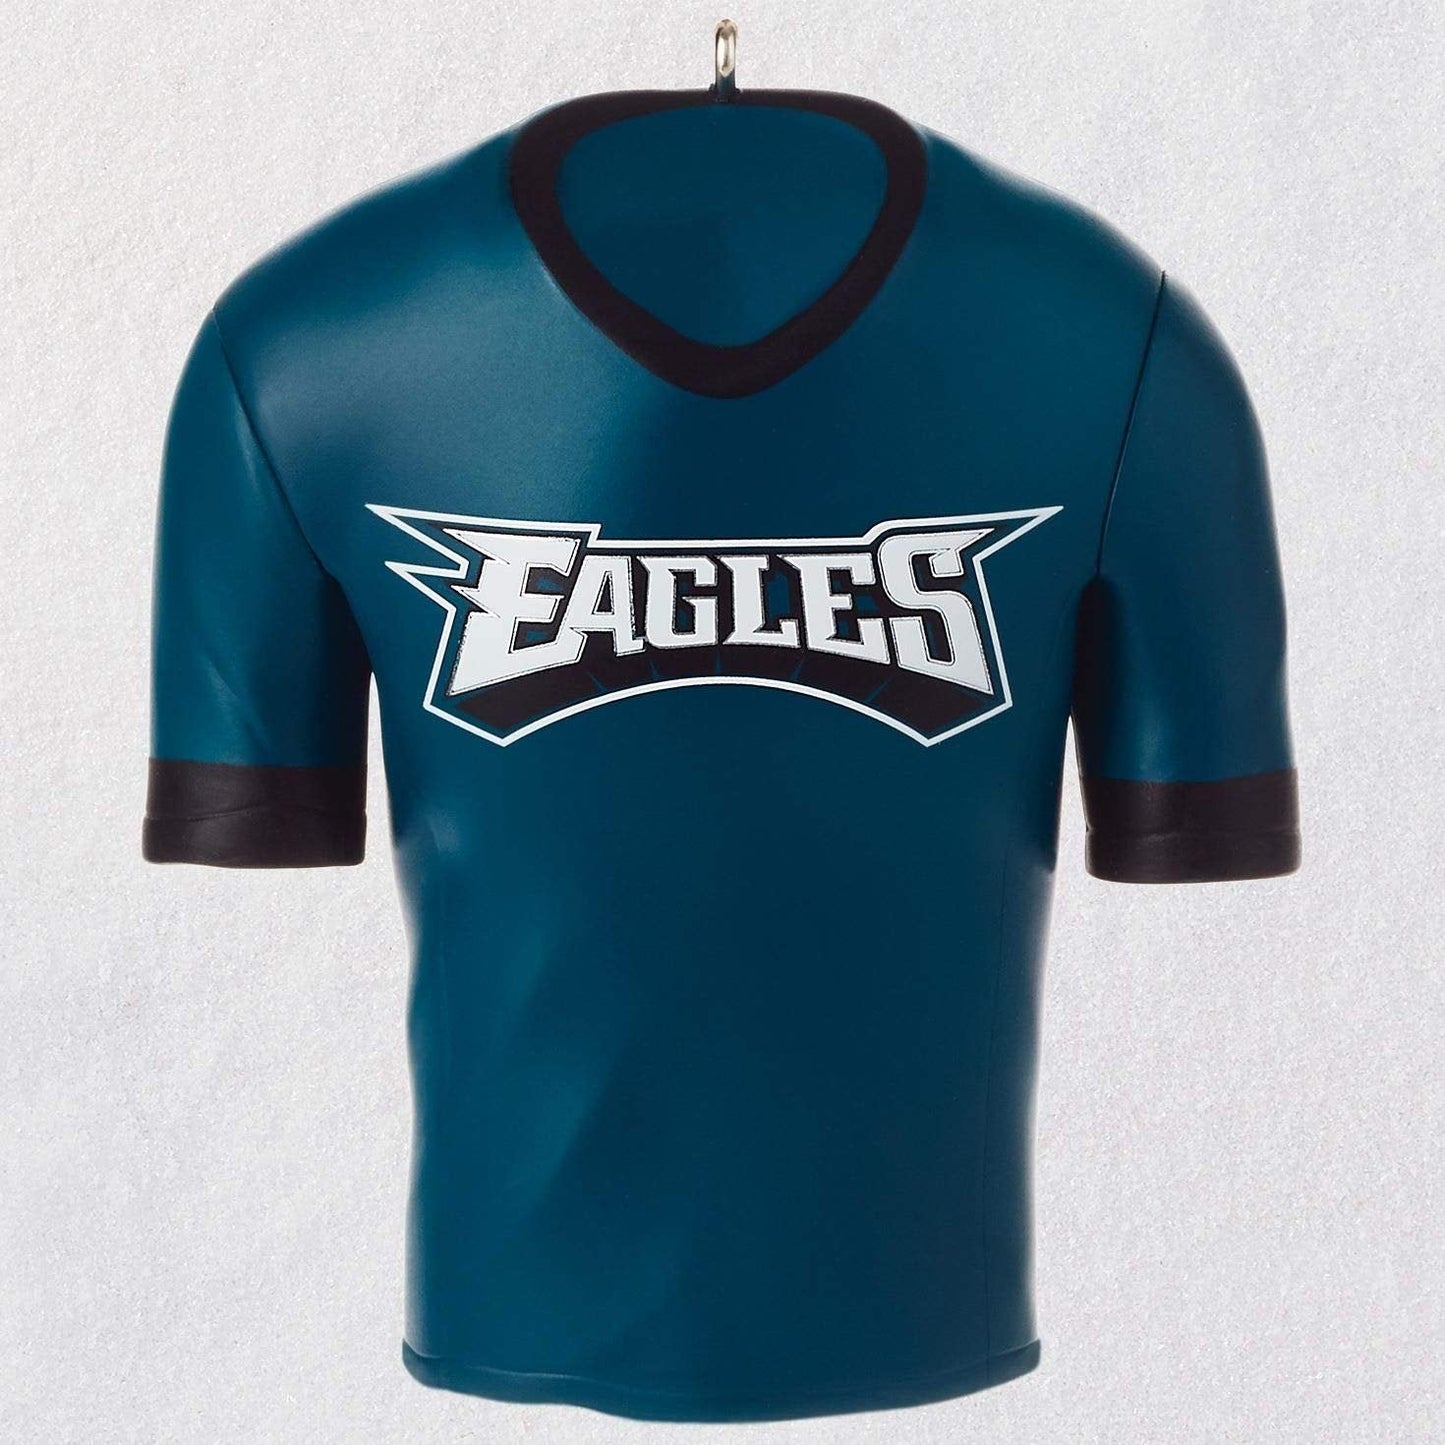 NFL Philadelphia Eagles Jersey Keepsake Ornament